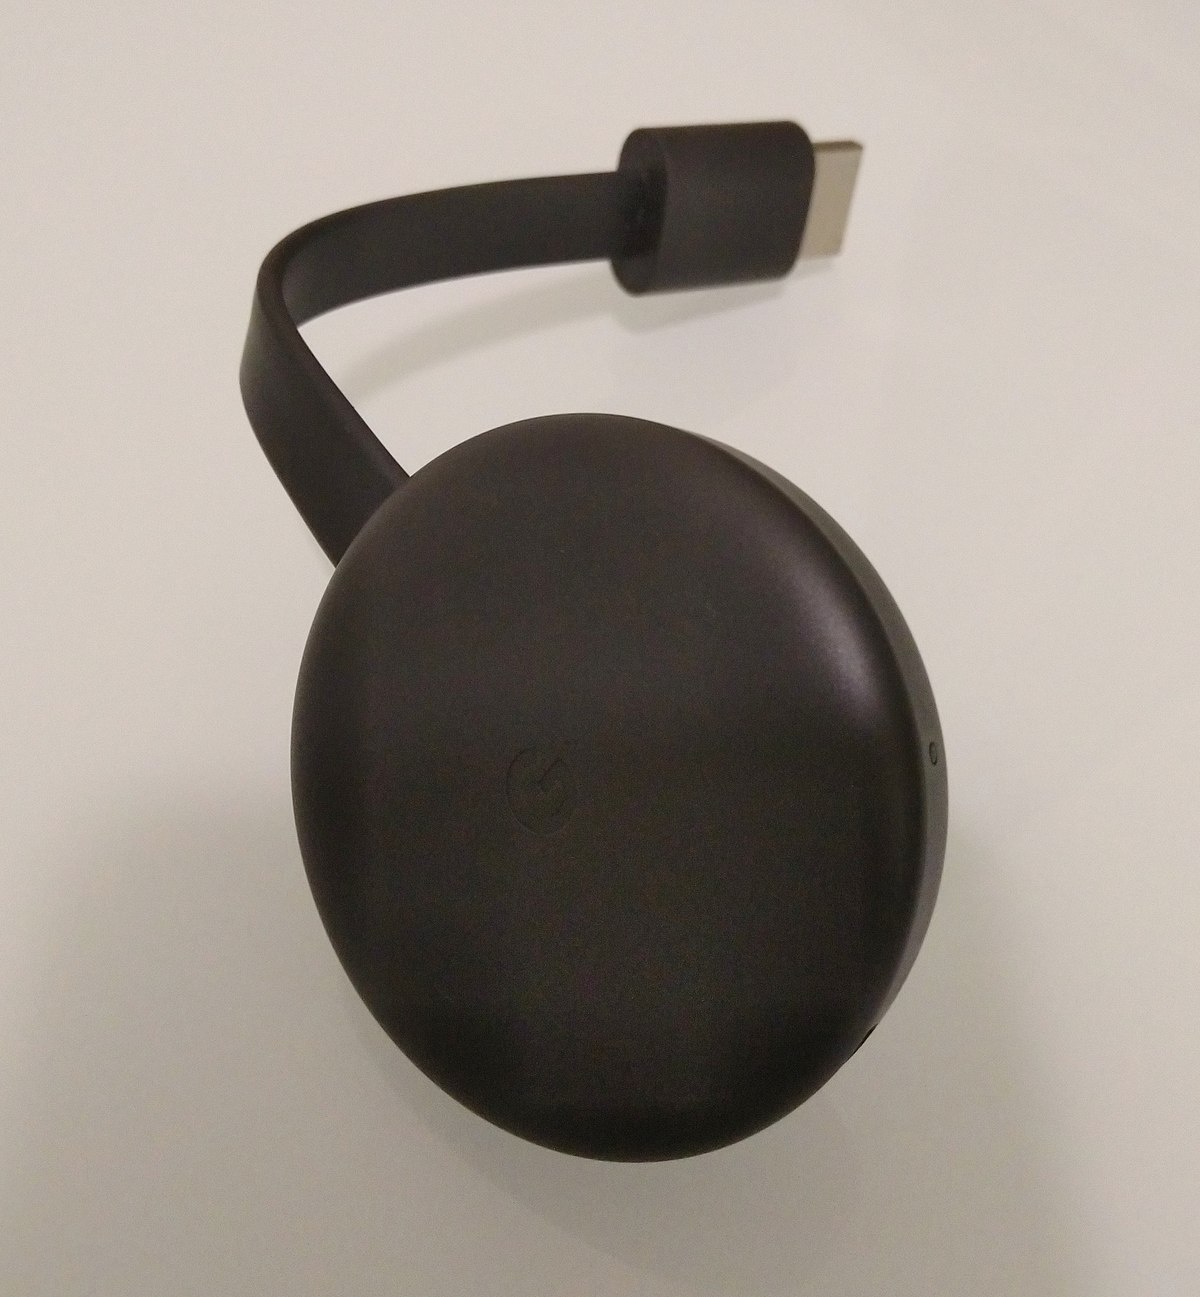 Chromecast - Wikipedia